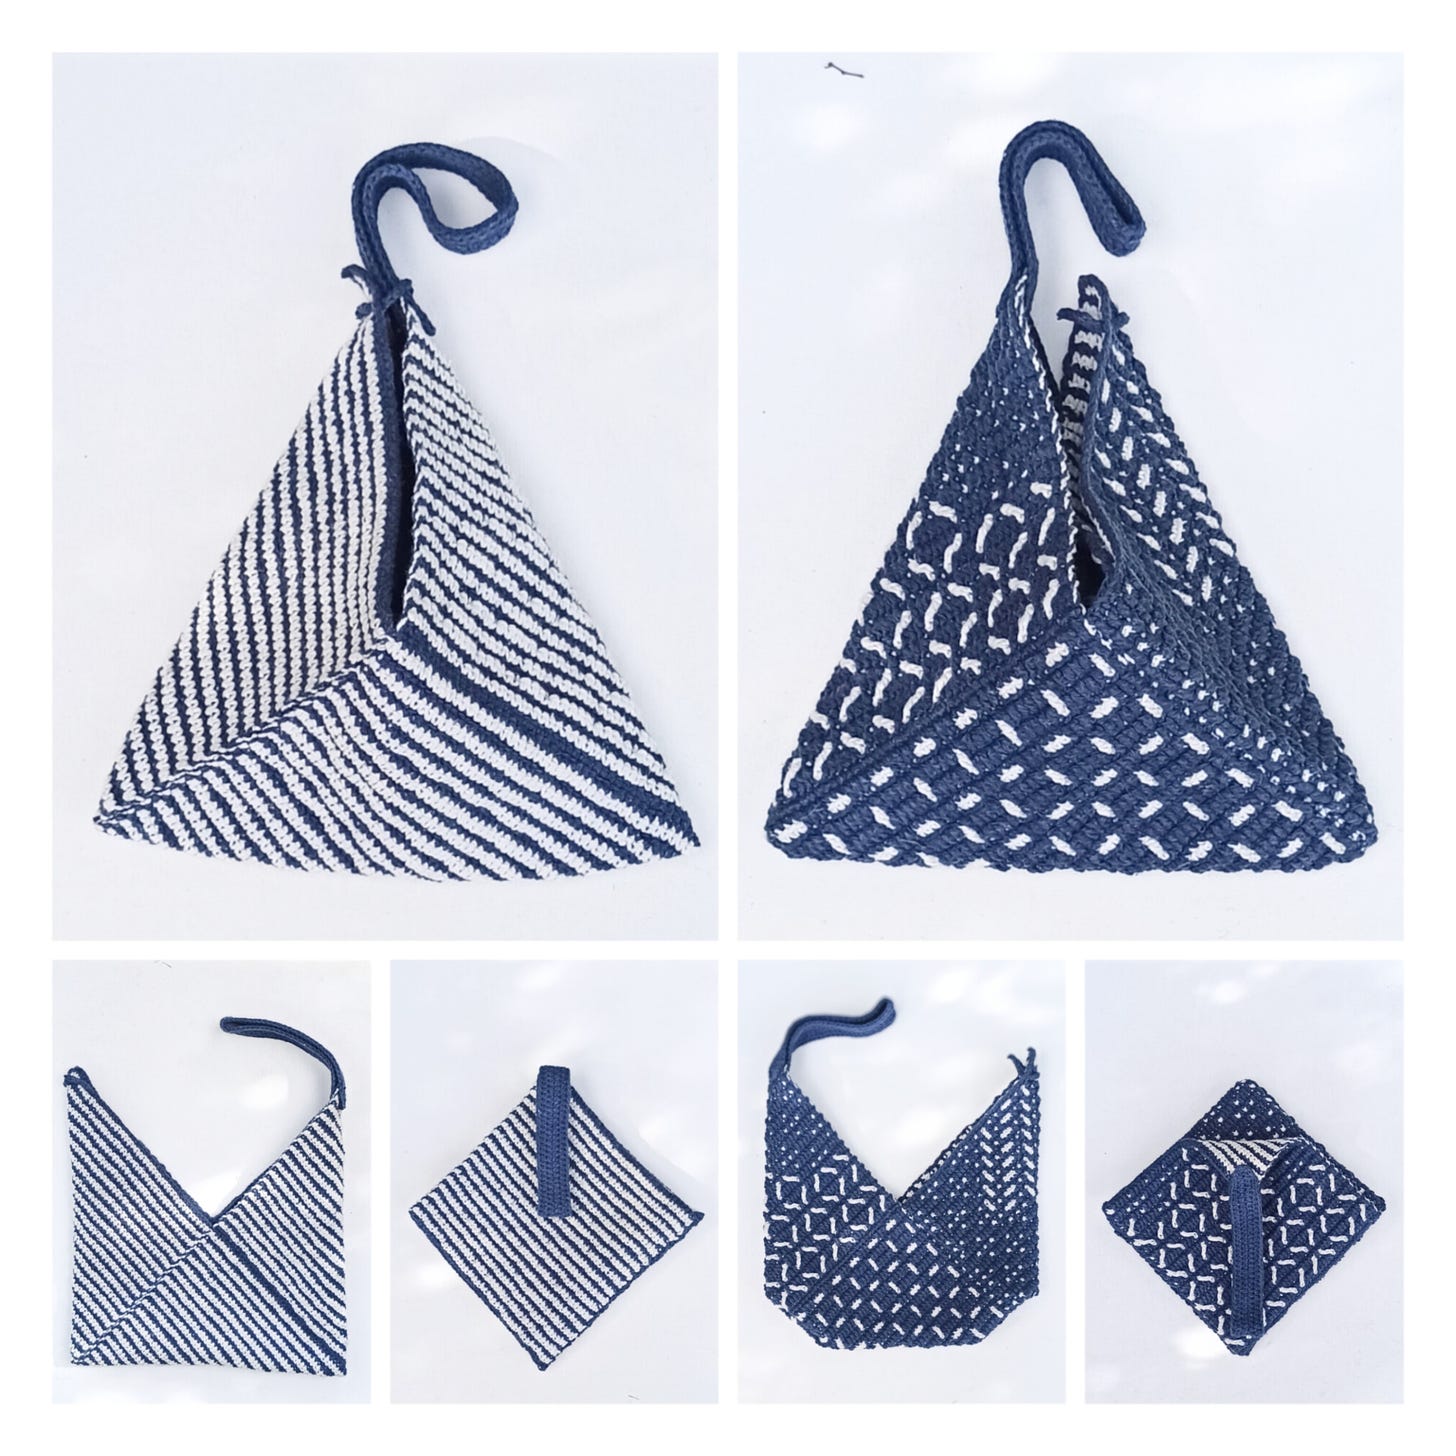 Overlay mosaic crochet reversible bag: The Blue One with Sashiko.